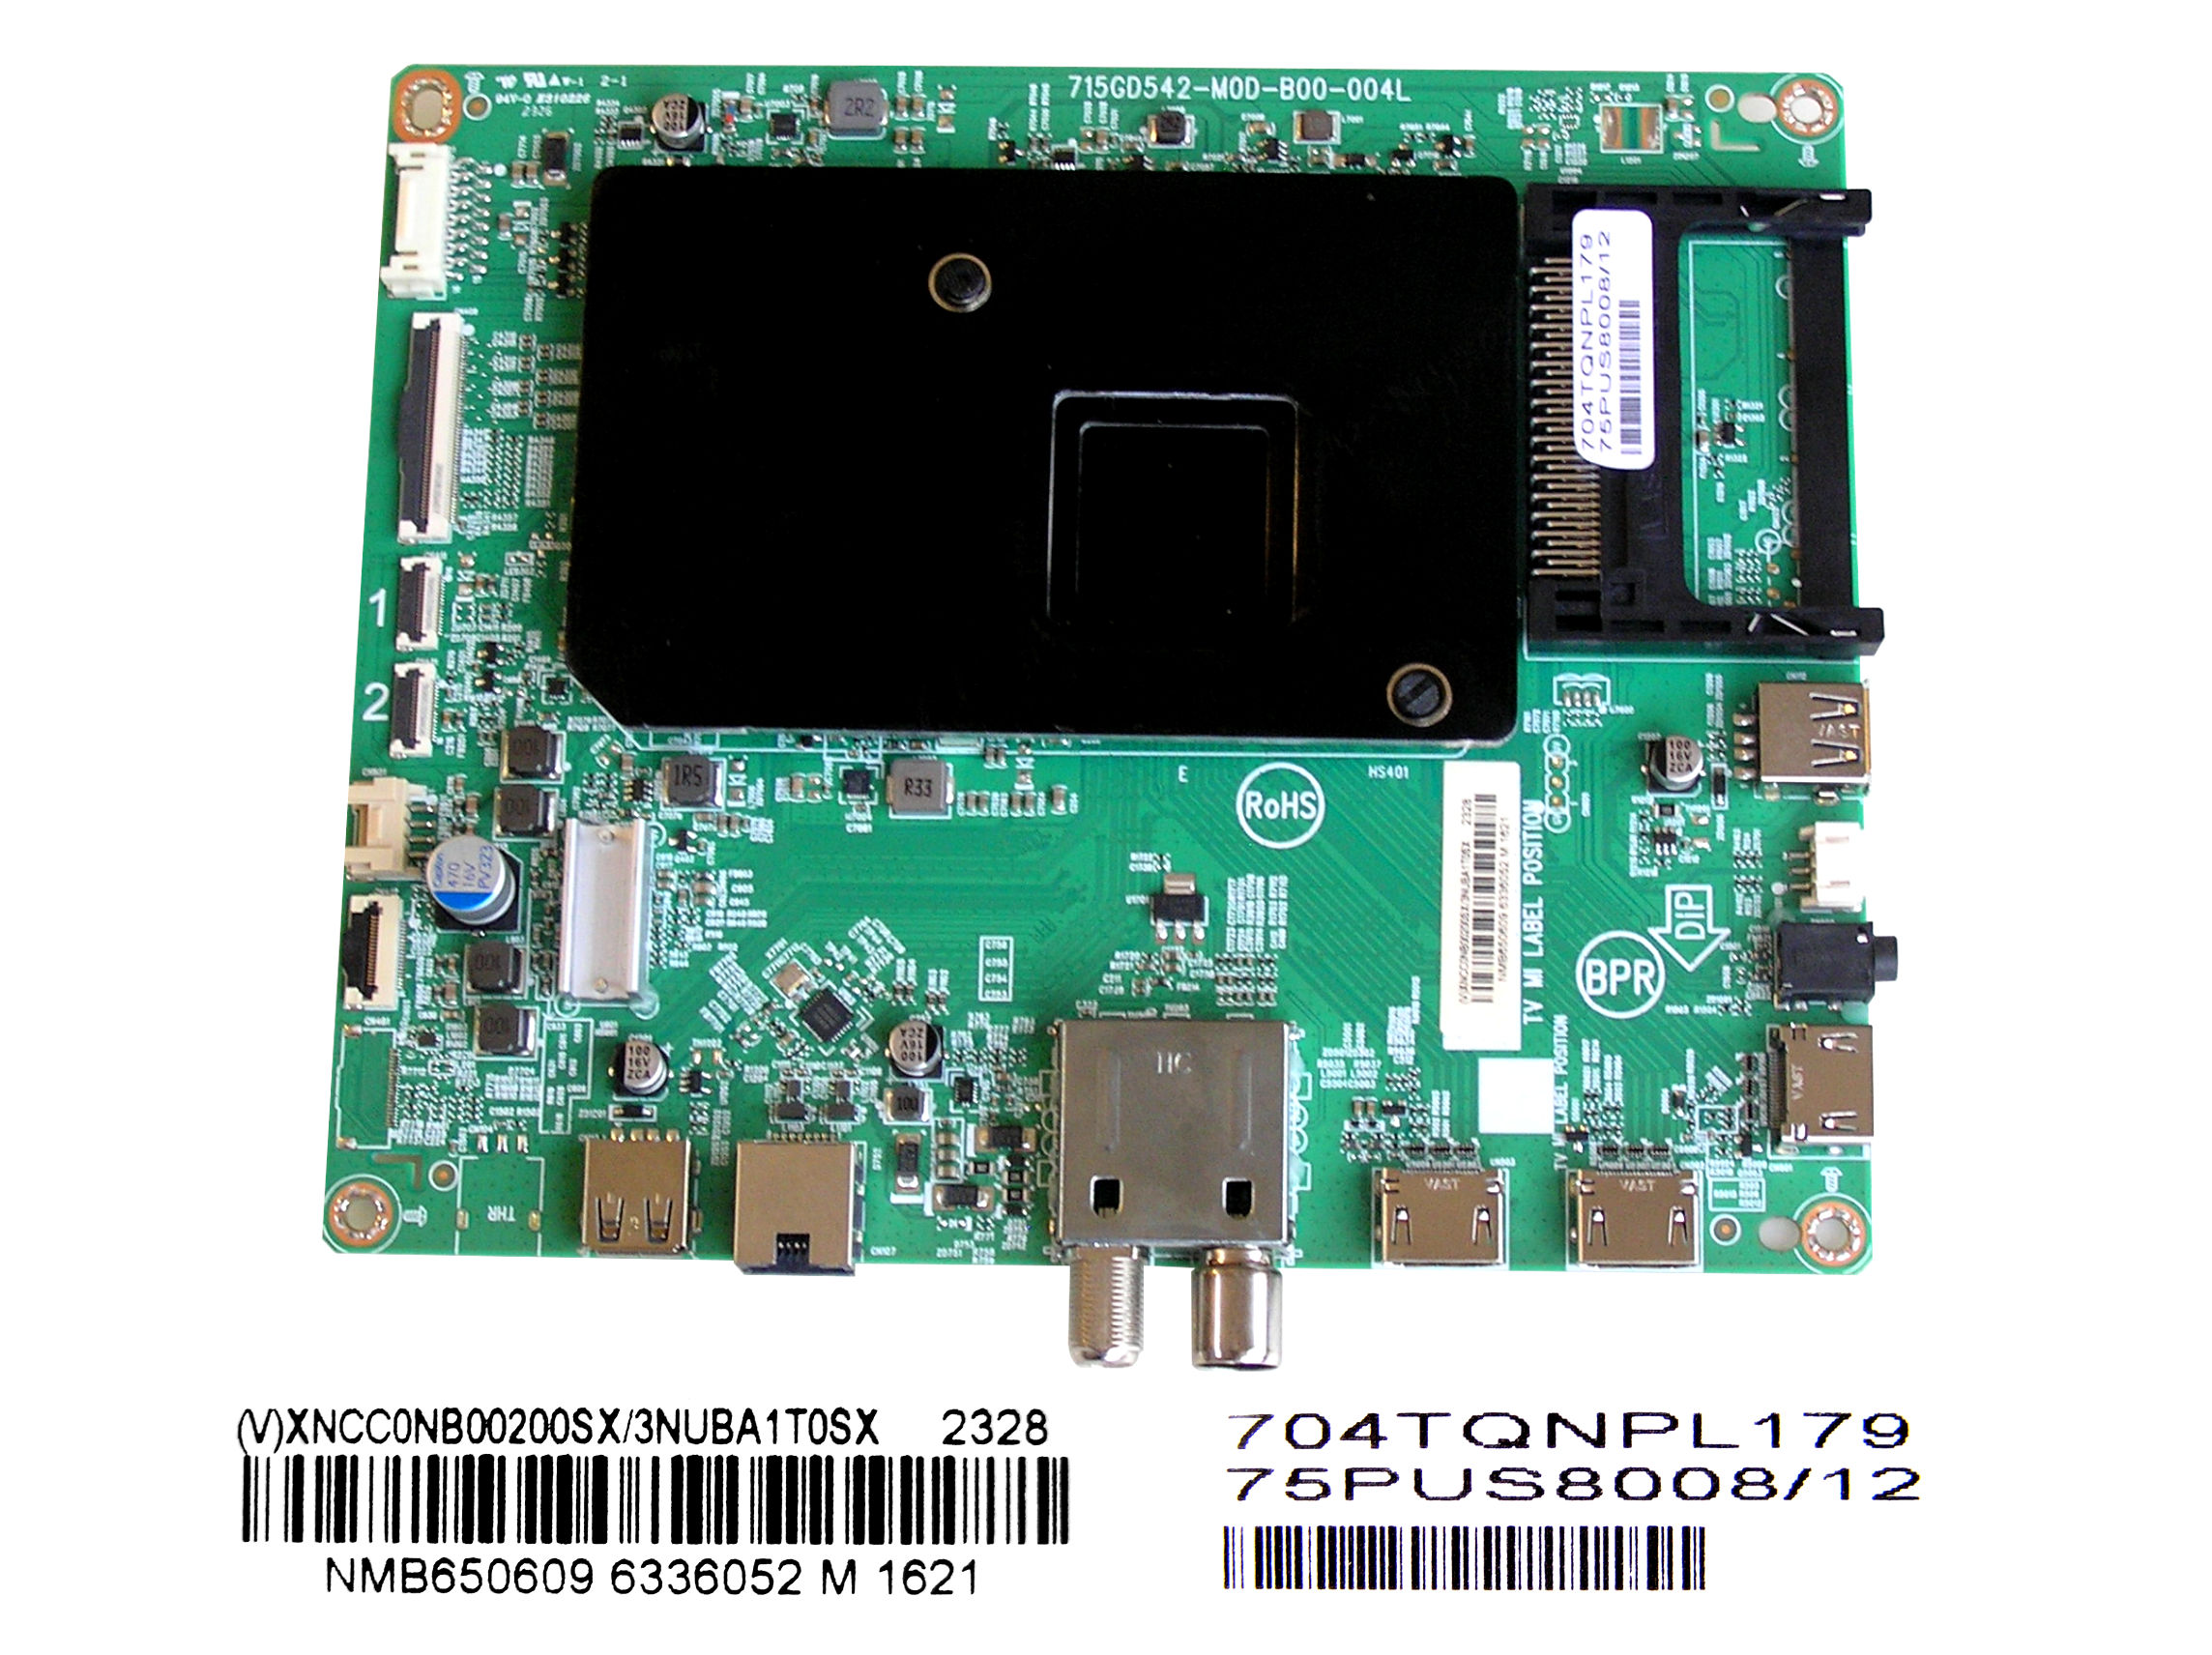 LCD LED modul základní deska XNCC0NB00200SX/3NUBA1T0SX / Main board assy 715GD542-M0D-B00-004L / 704TQNPL179